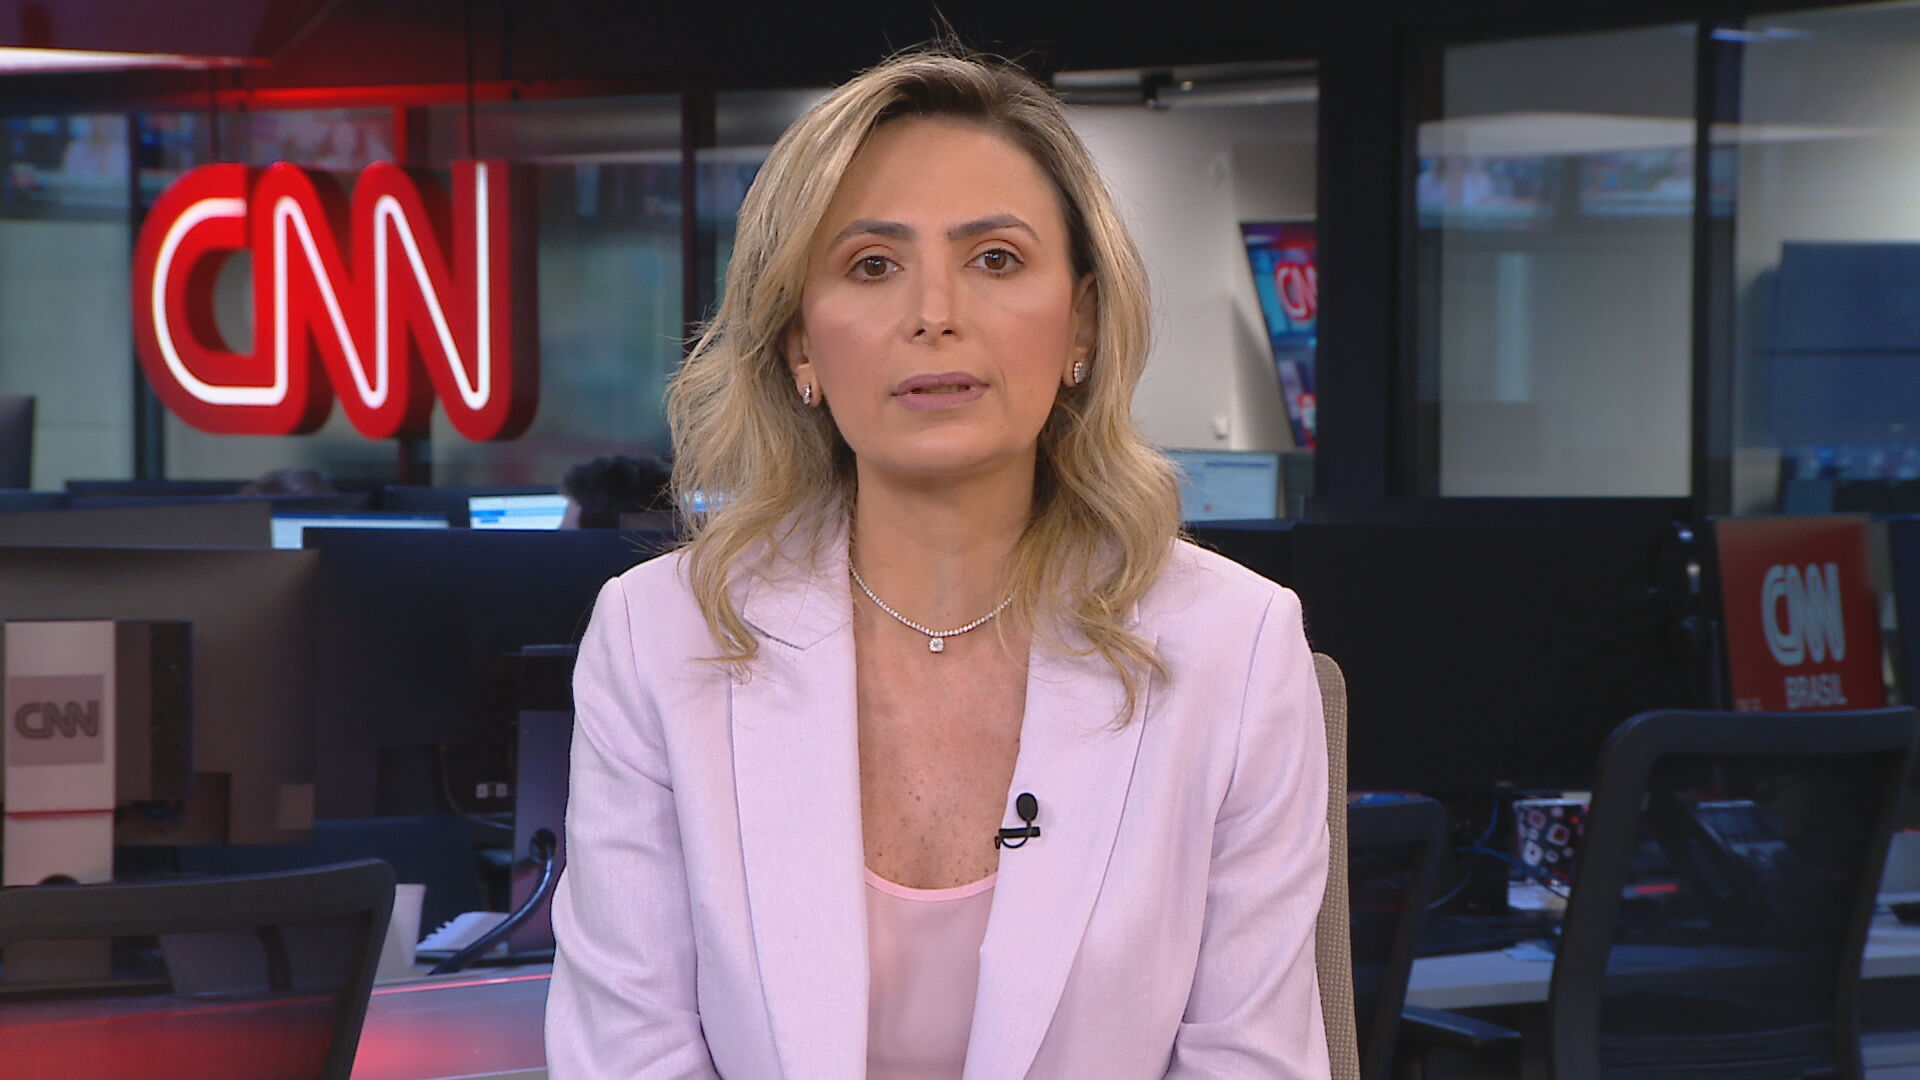 Cardiologista Ludhmila Hajjar falou à CNN neste domingo